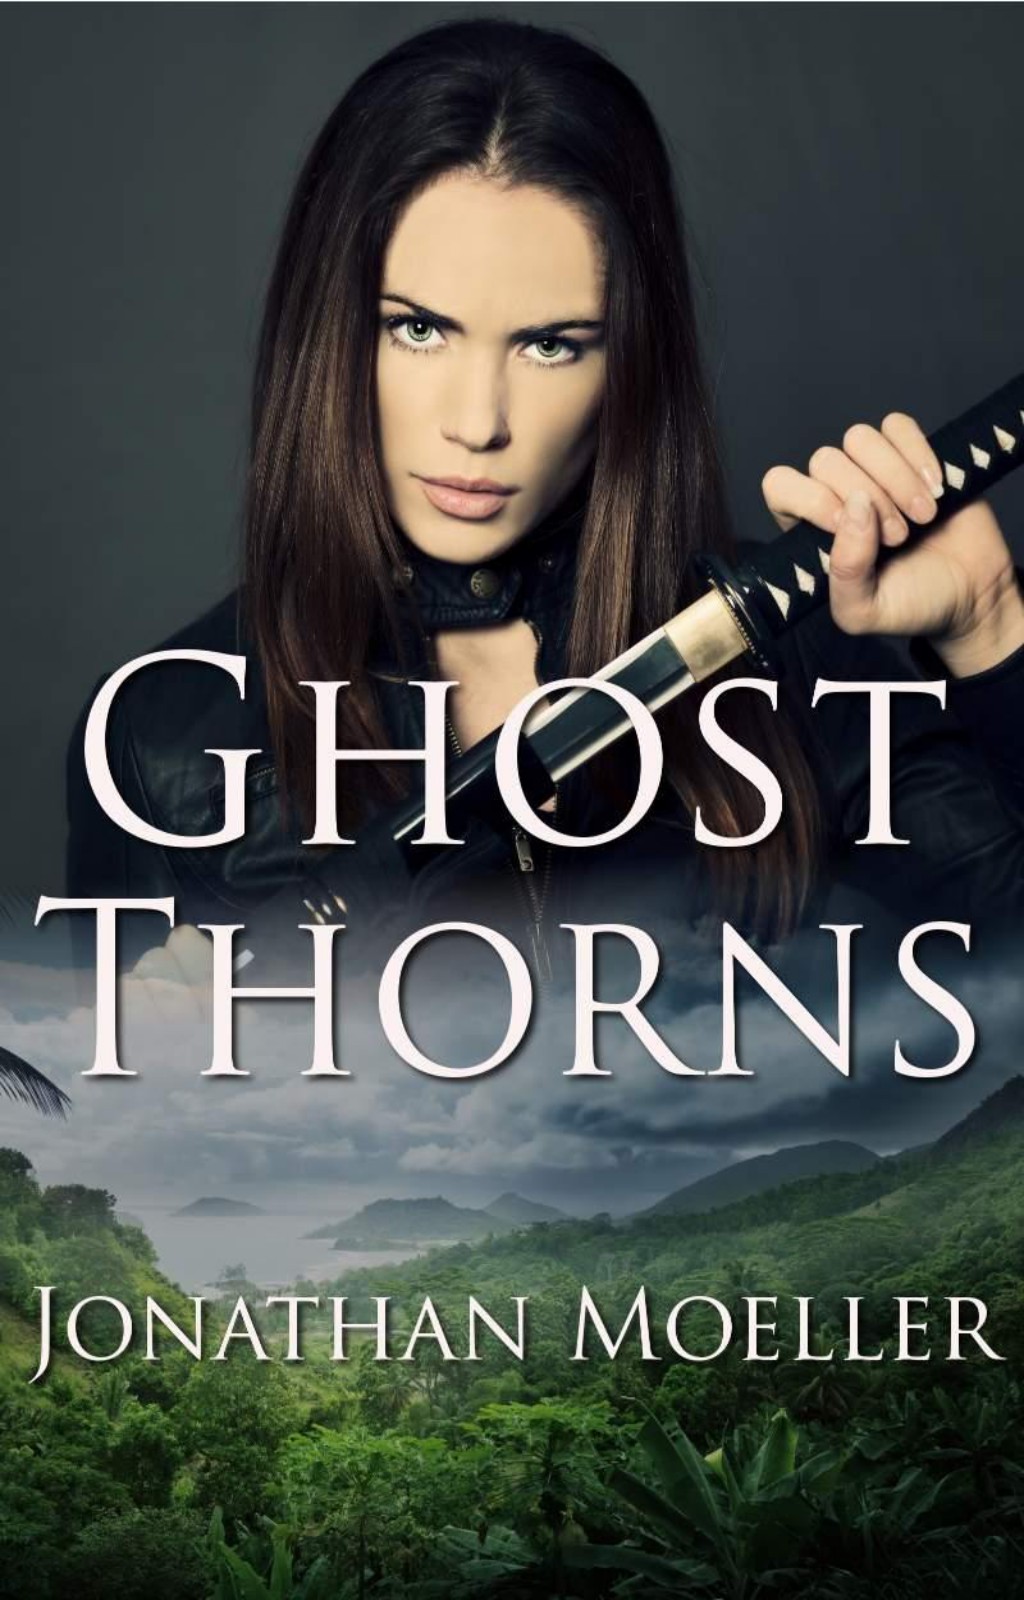 Ghost Thorns by Jonathan Moeller